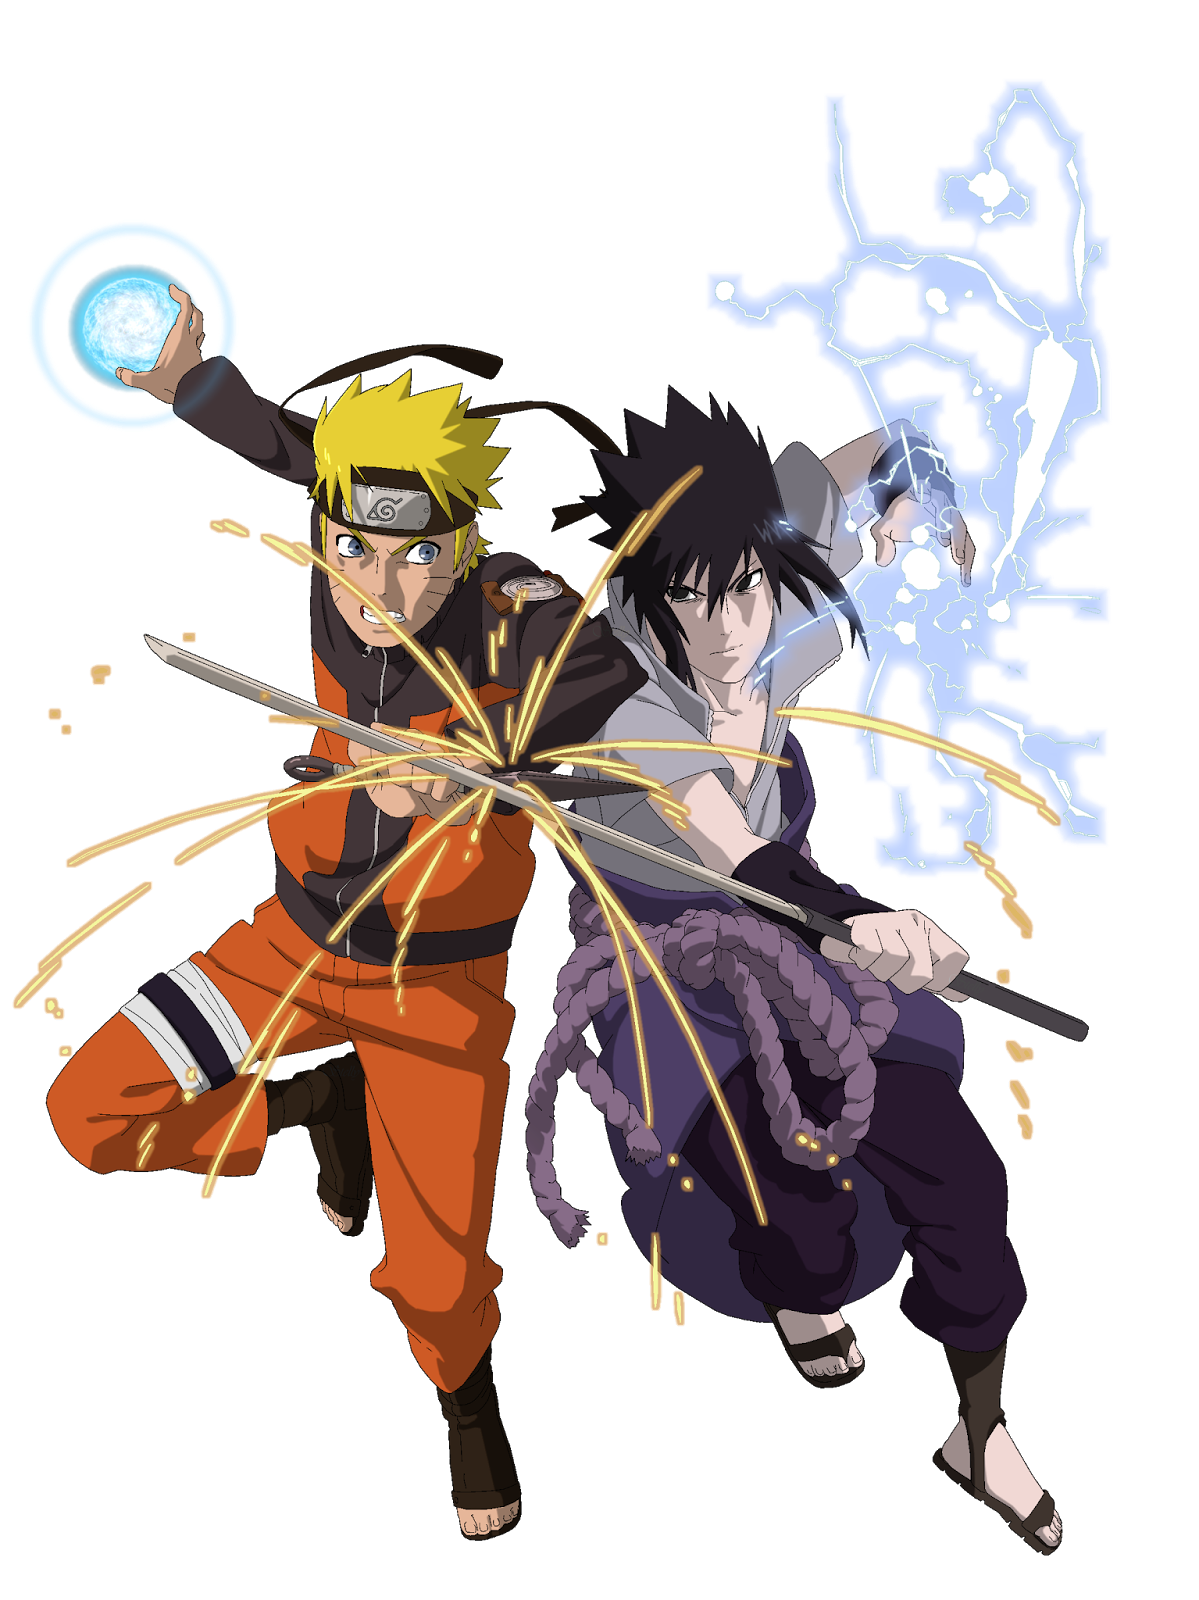 Animé imágenes by Akatsuki Karasu: 29 renders de Naruto Uzumaki